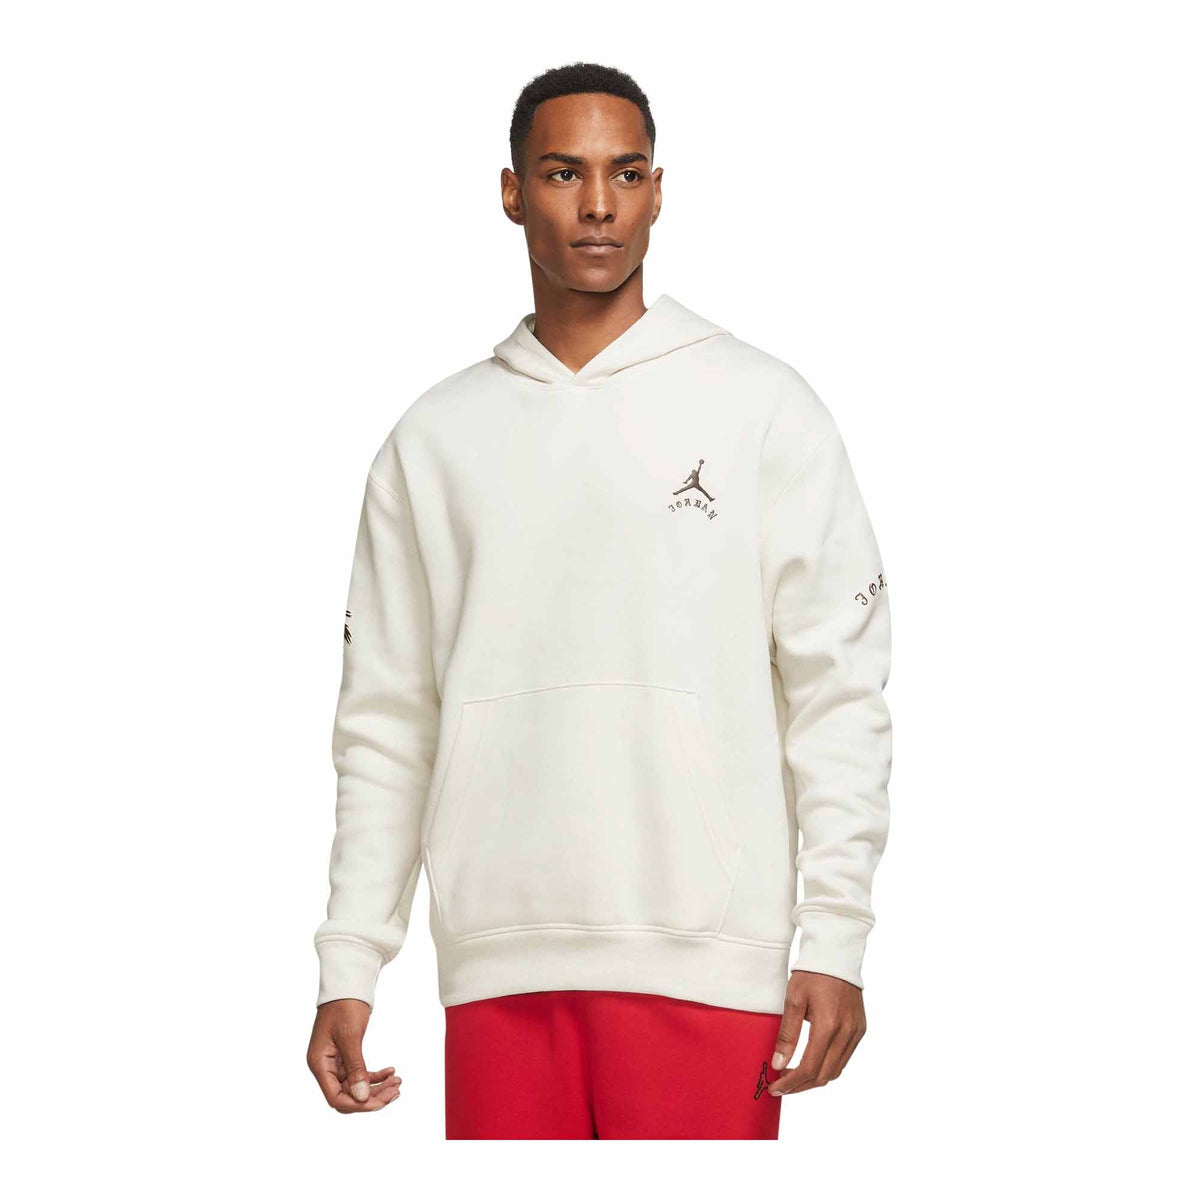 Air Jordan Hoodie Men's Small Gray Sweatshirt Cotton Blend